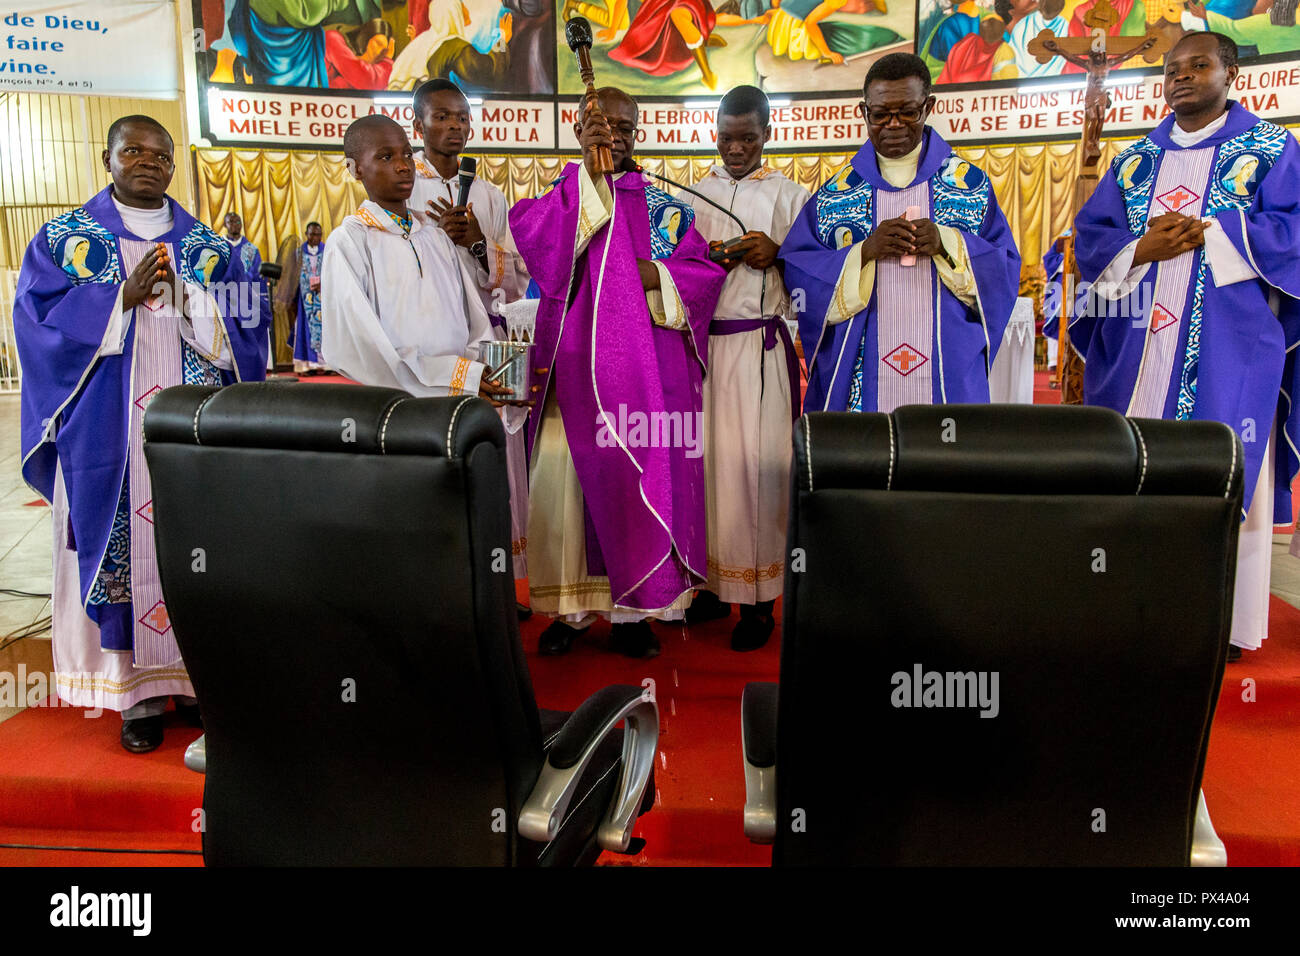 Celebration for the 20th anniversary of Radio Maria in Cristo Risorto de Hedzranawoe catholic parish church, LomÃ©, Togo. Armchairs offered to the rad Stock Photo